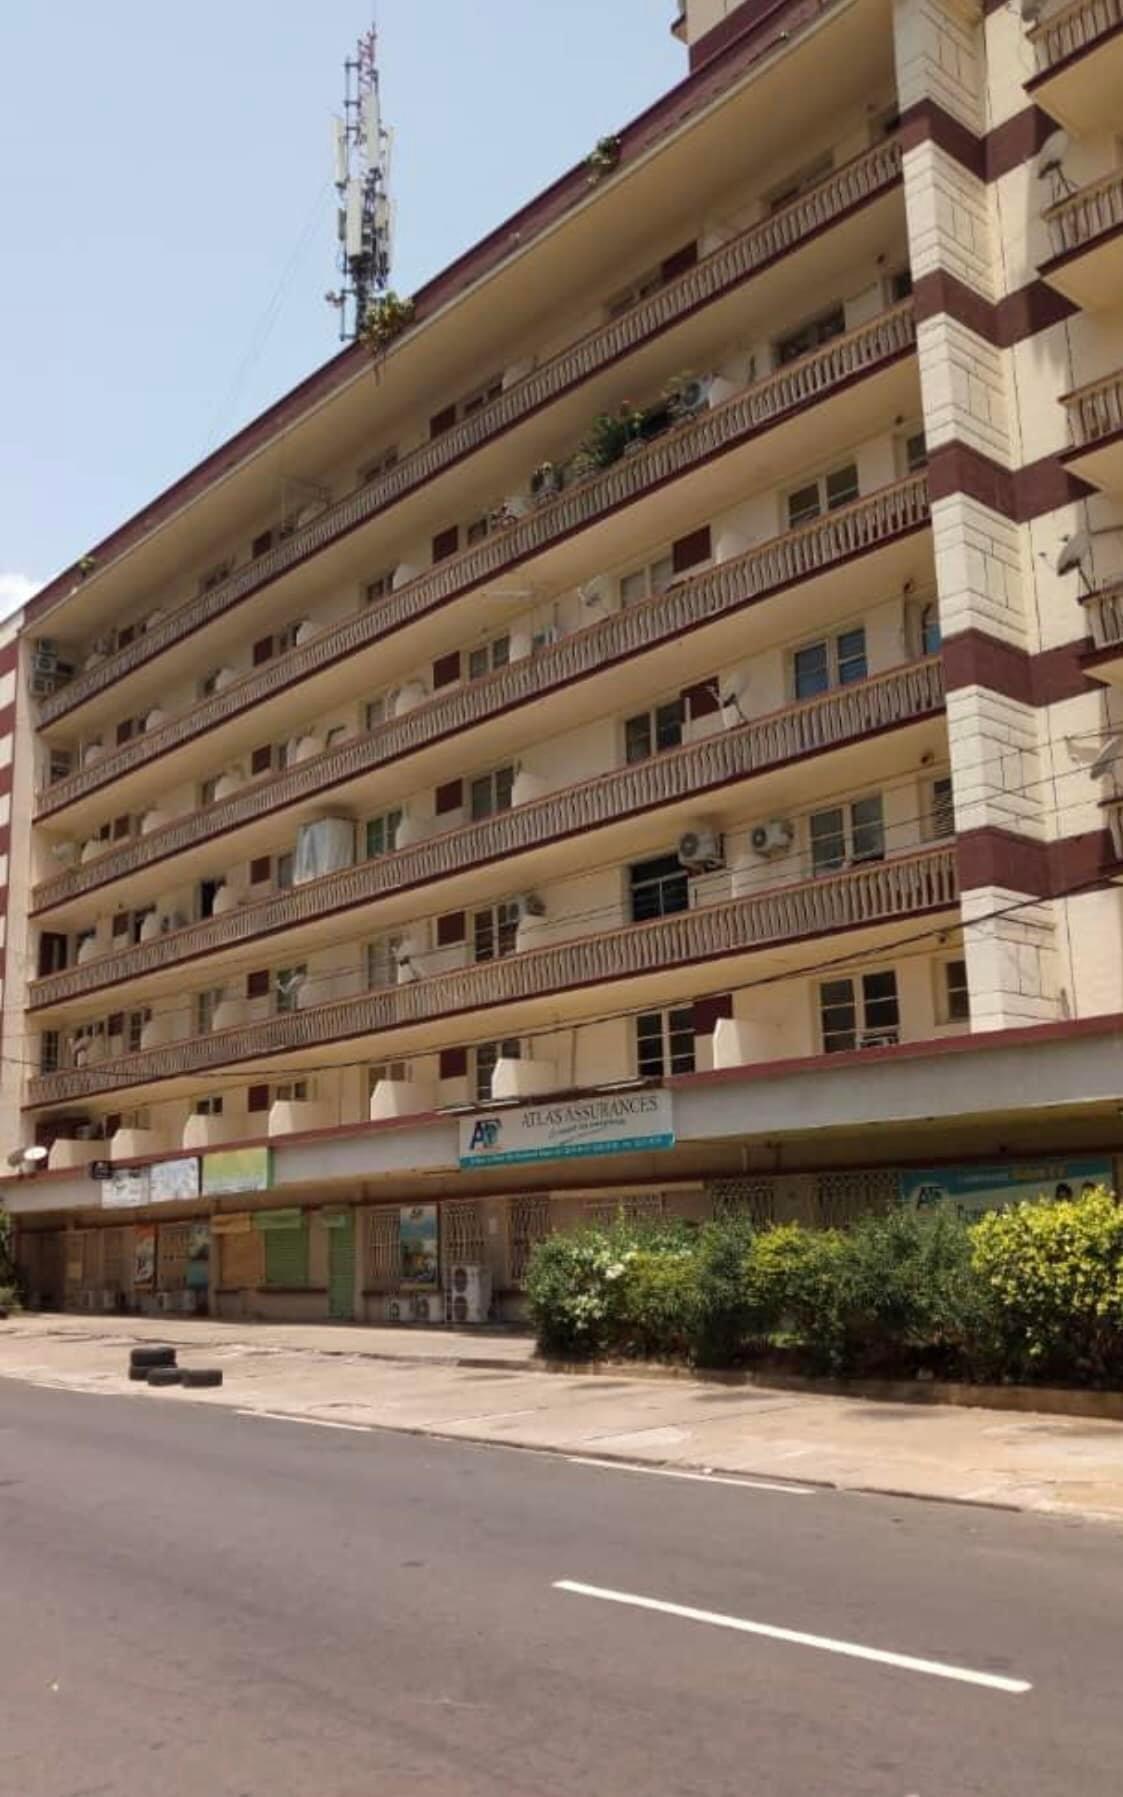 Vente d'un Immeuble à 14.000.000.000 FCFA  : Abidjan-Plateau (Plateau )